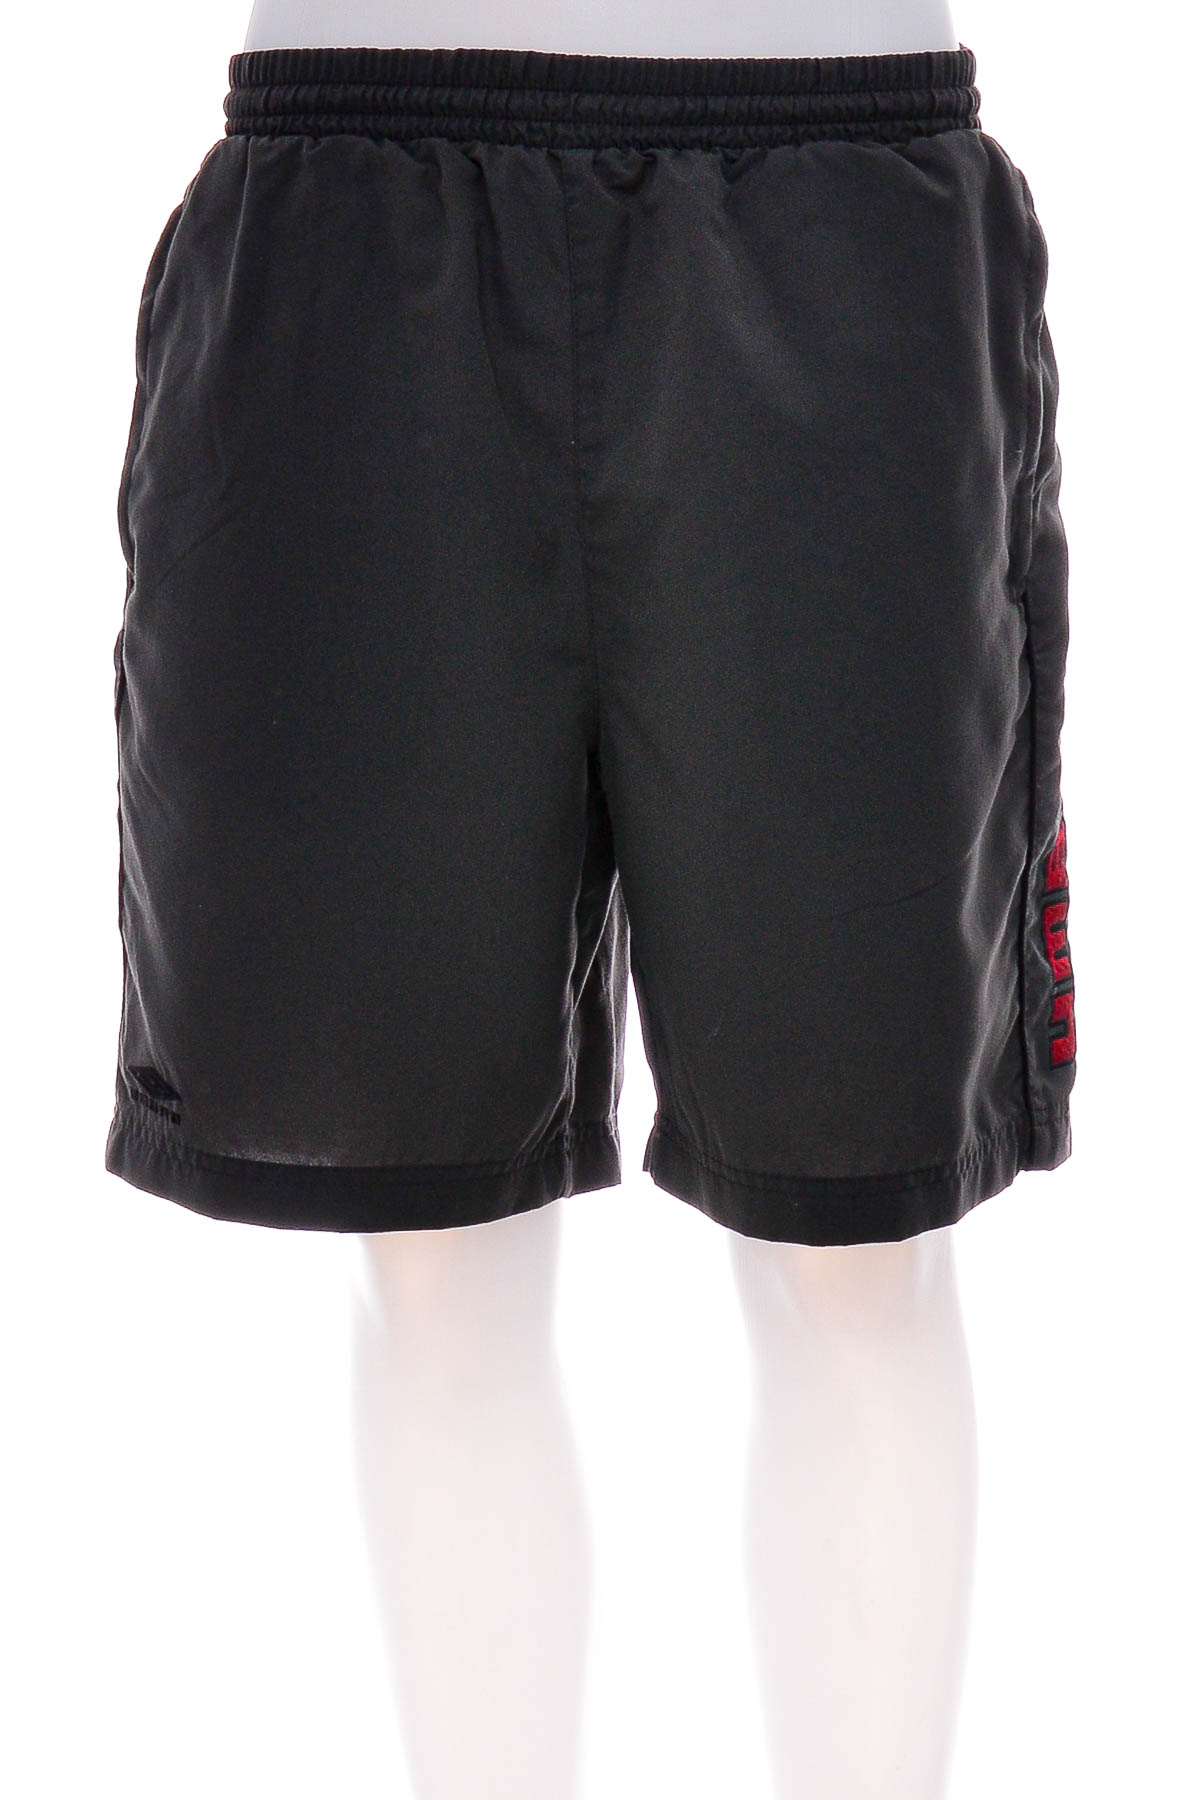 Men's shorts - Umbro - 0